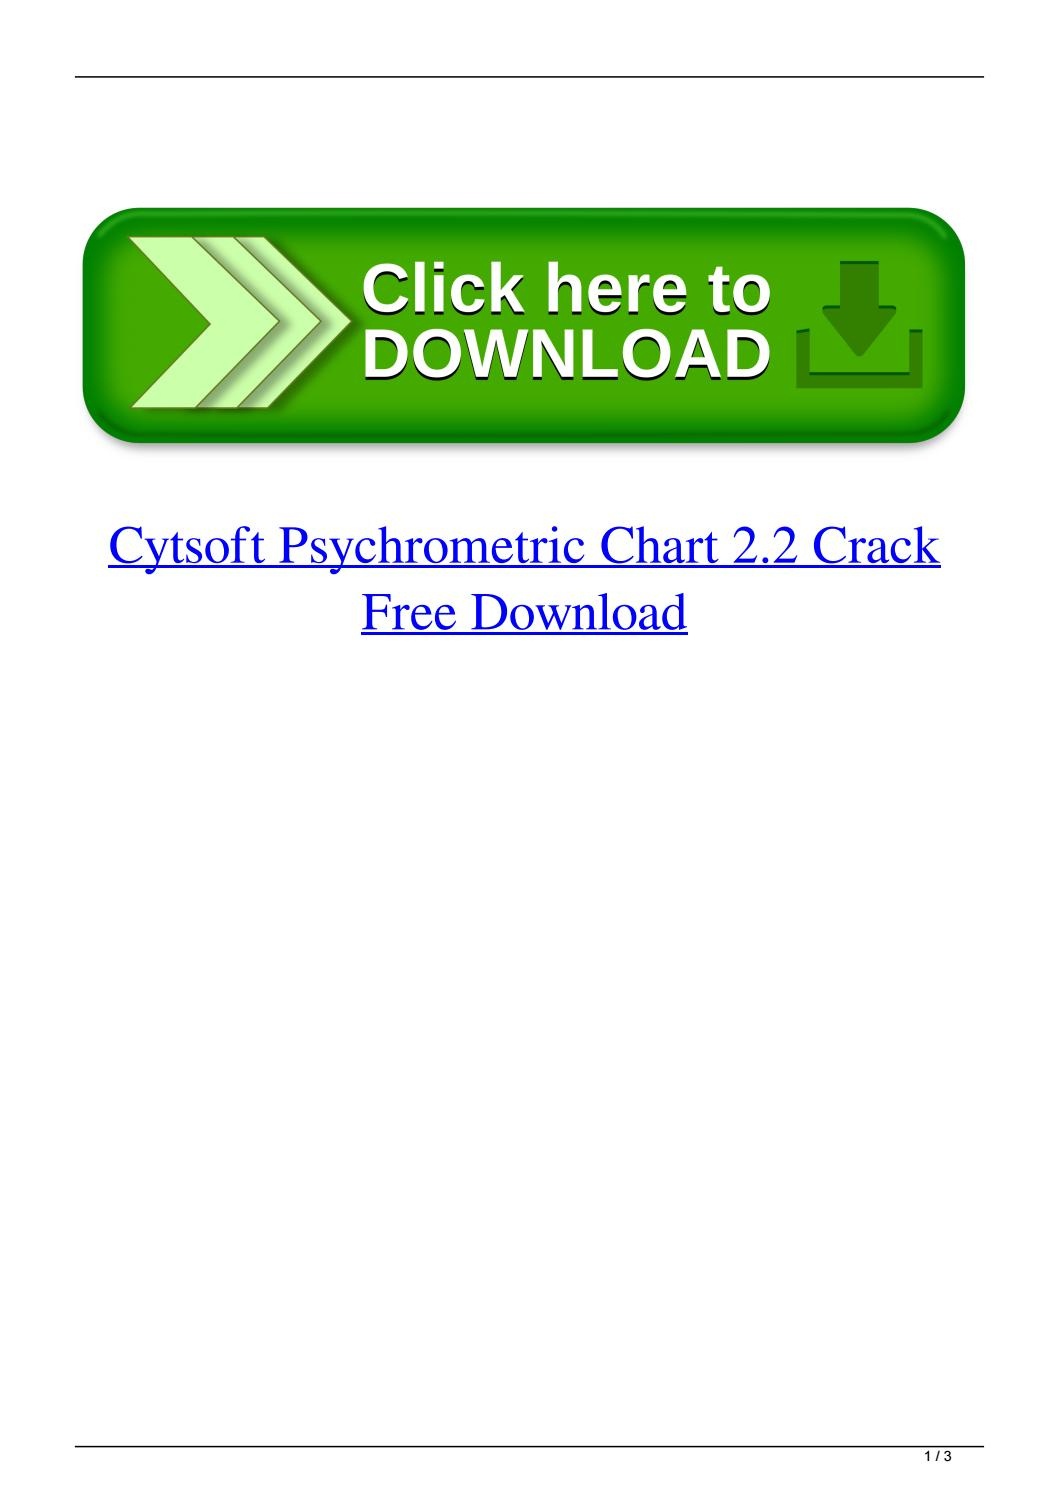 Cytsoft Psychrometric Chart 2.2 Crack Free Downloadteltalethu - Printable Psychrometric Chart Free